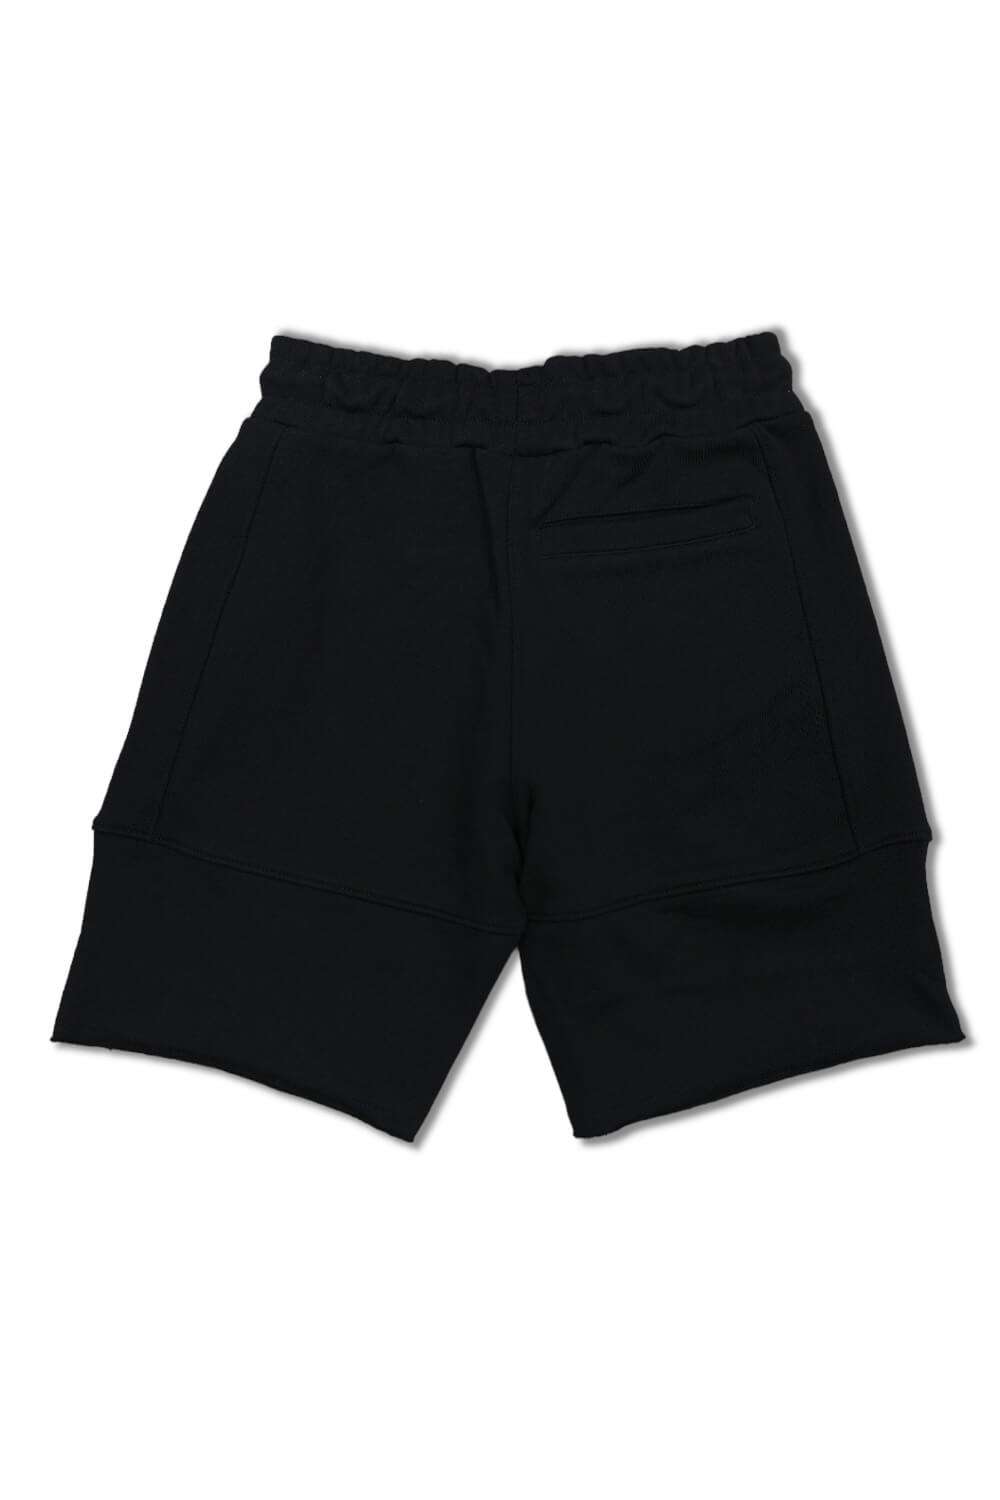 G West Sweat Shorts -Black